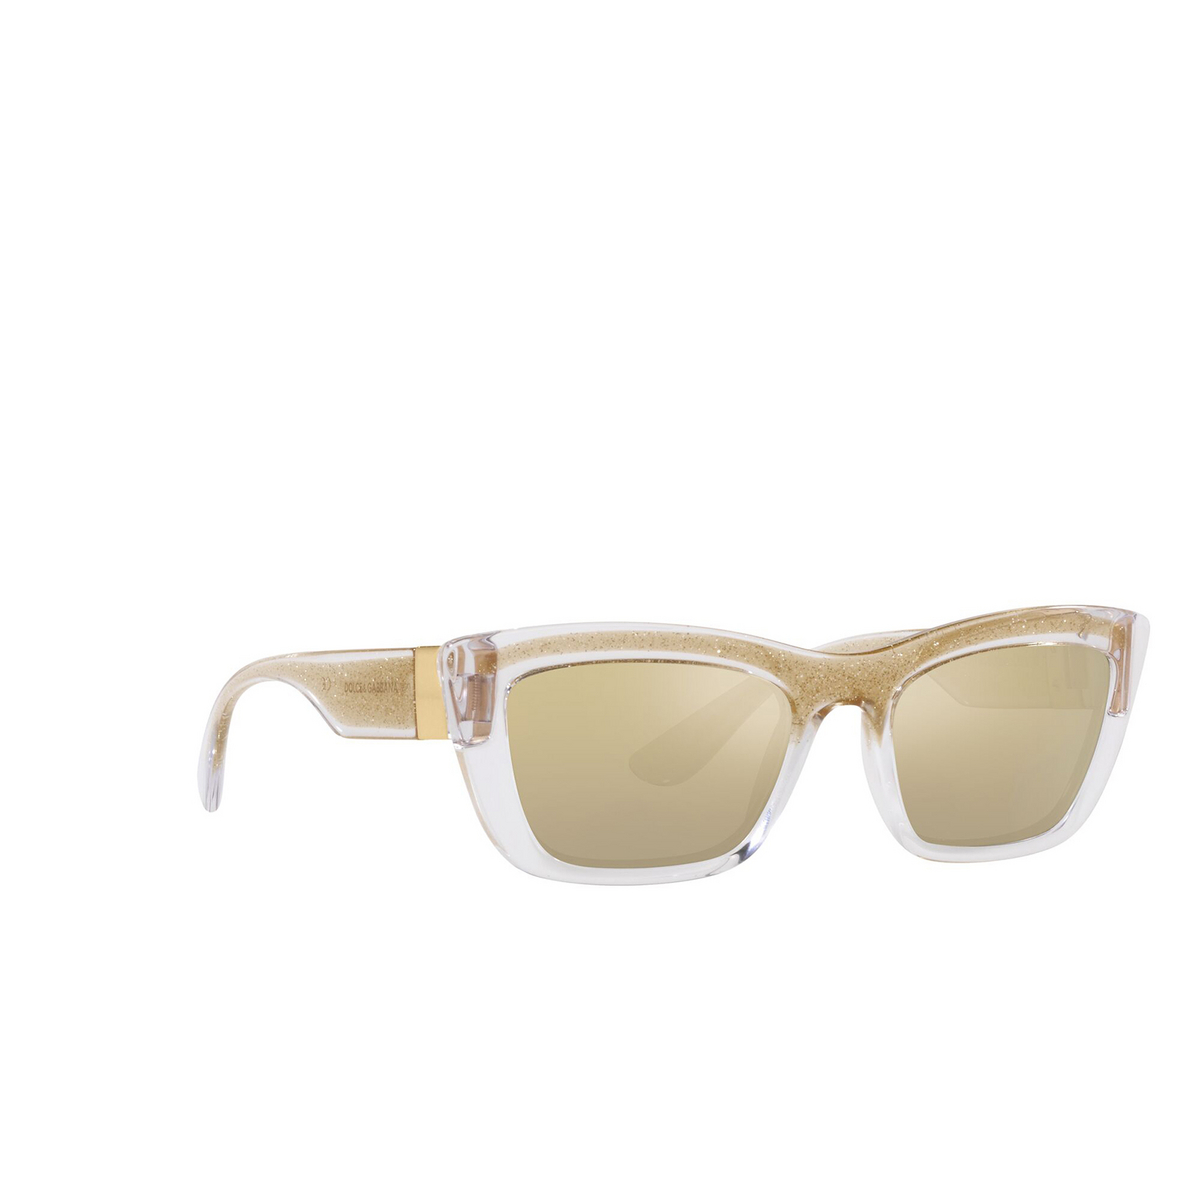 Dolce & Gabbana® Cat-eye Sunglasses: DG6171 color Transparent/gold Glitter 3352V9 - three-quarters view.